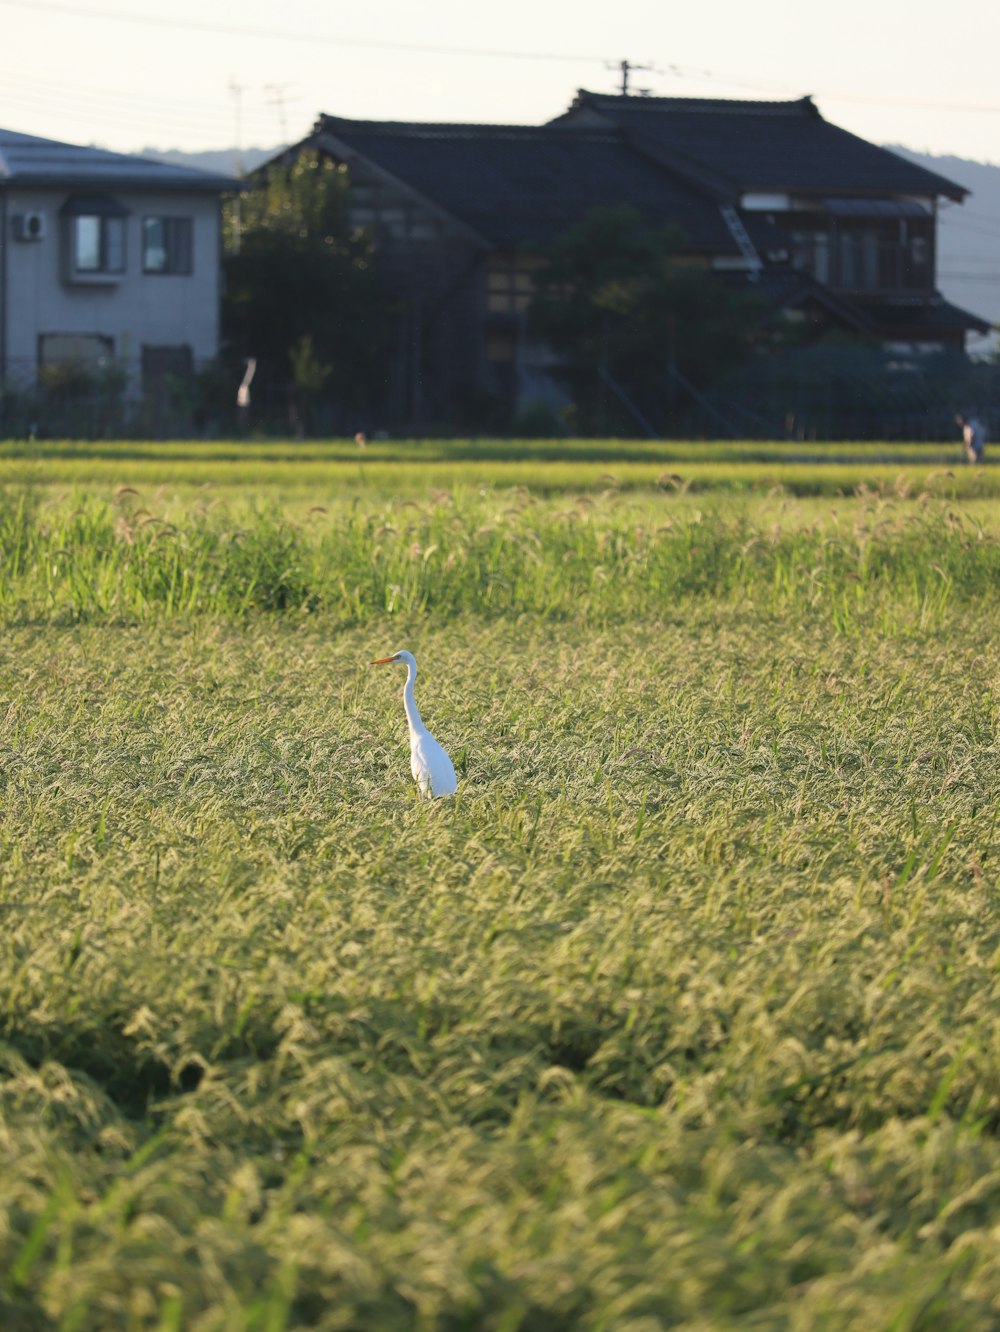 a bird is standing in a field of grass